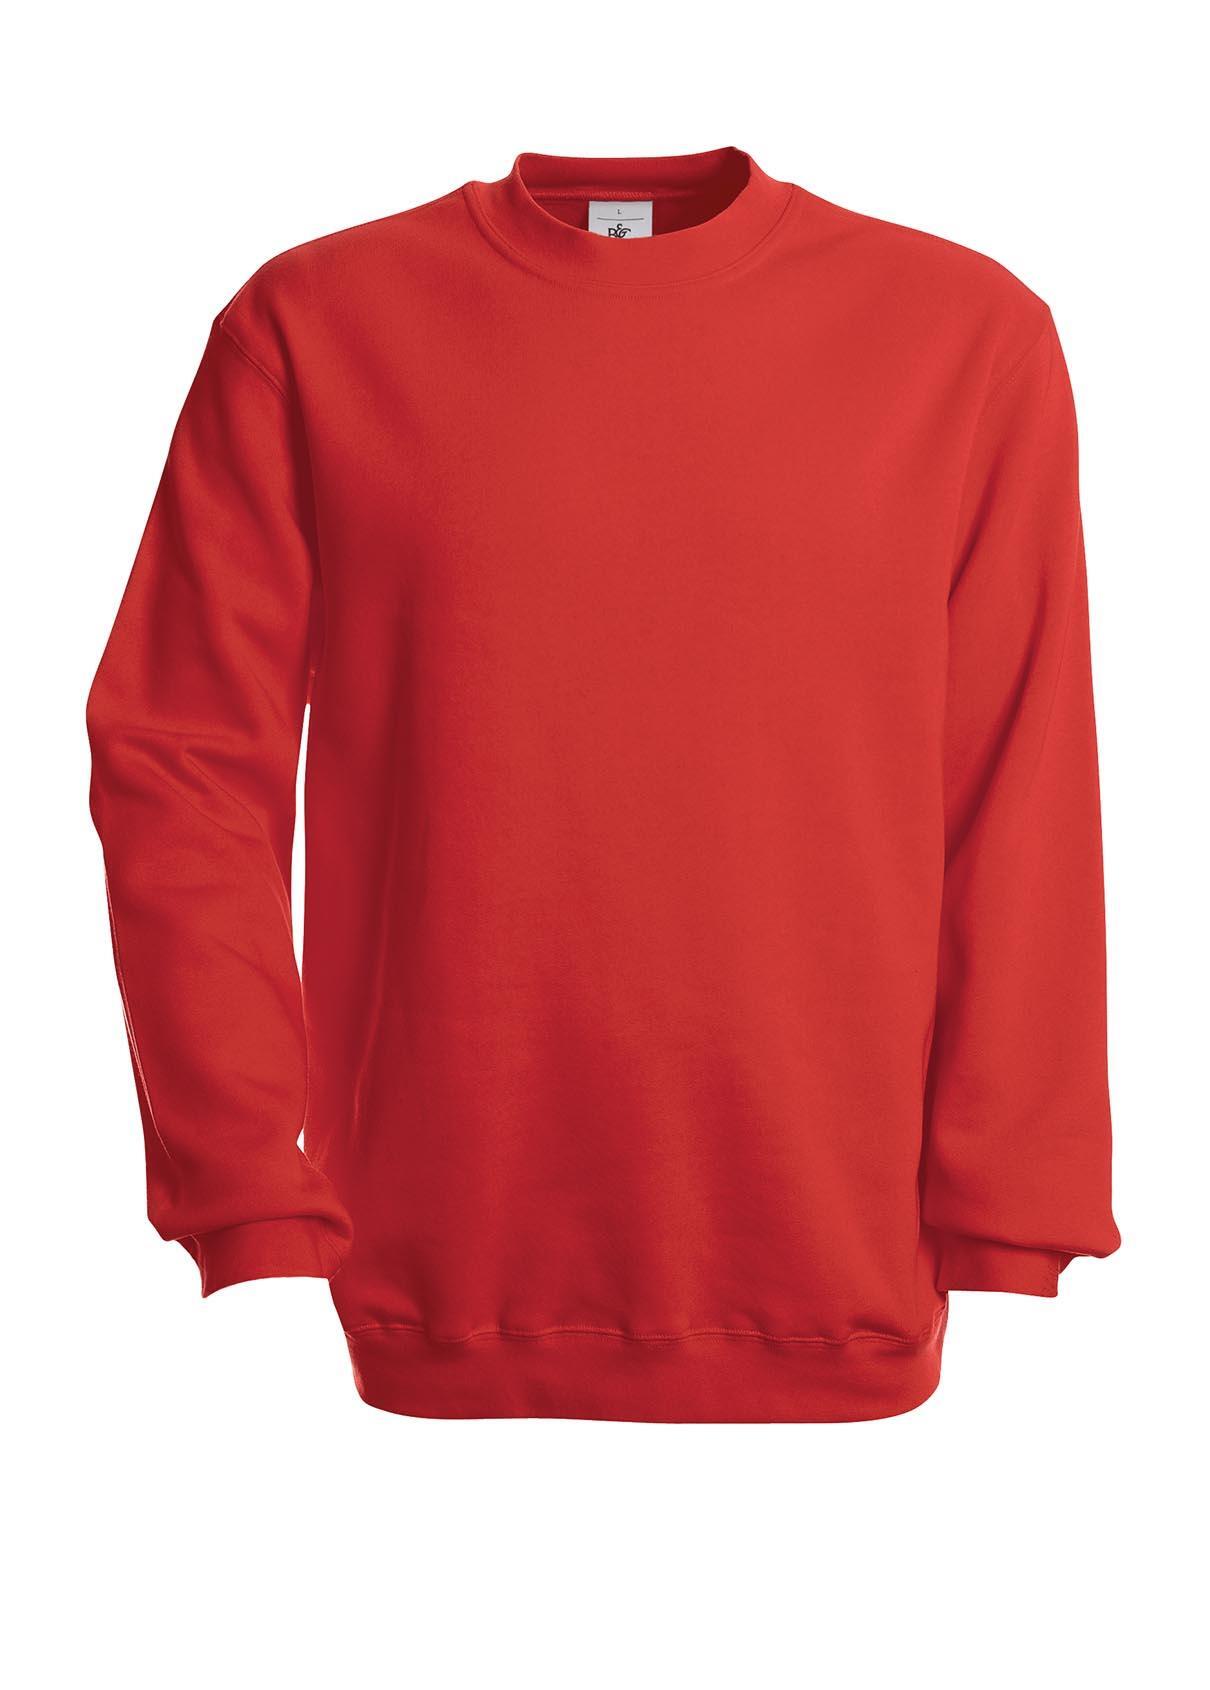 Rode trui Sweater heren